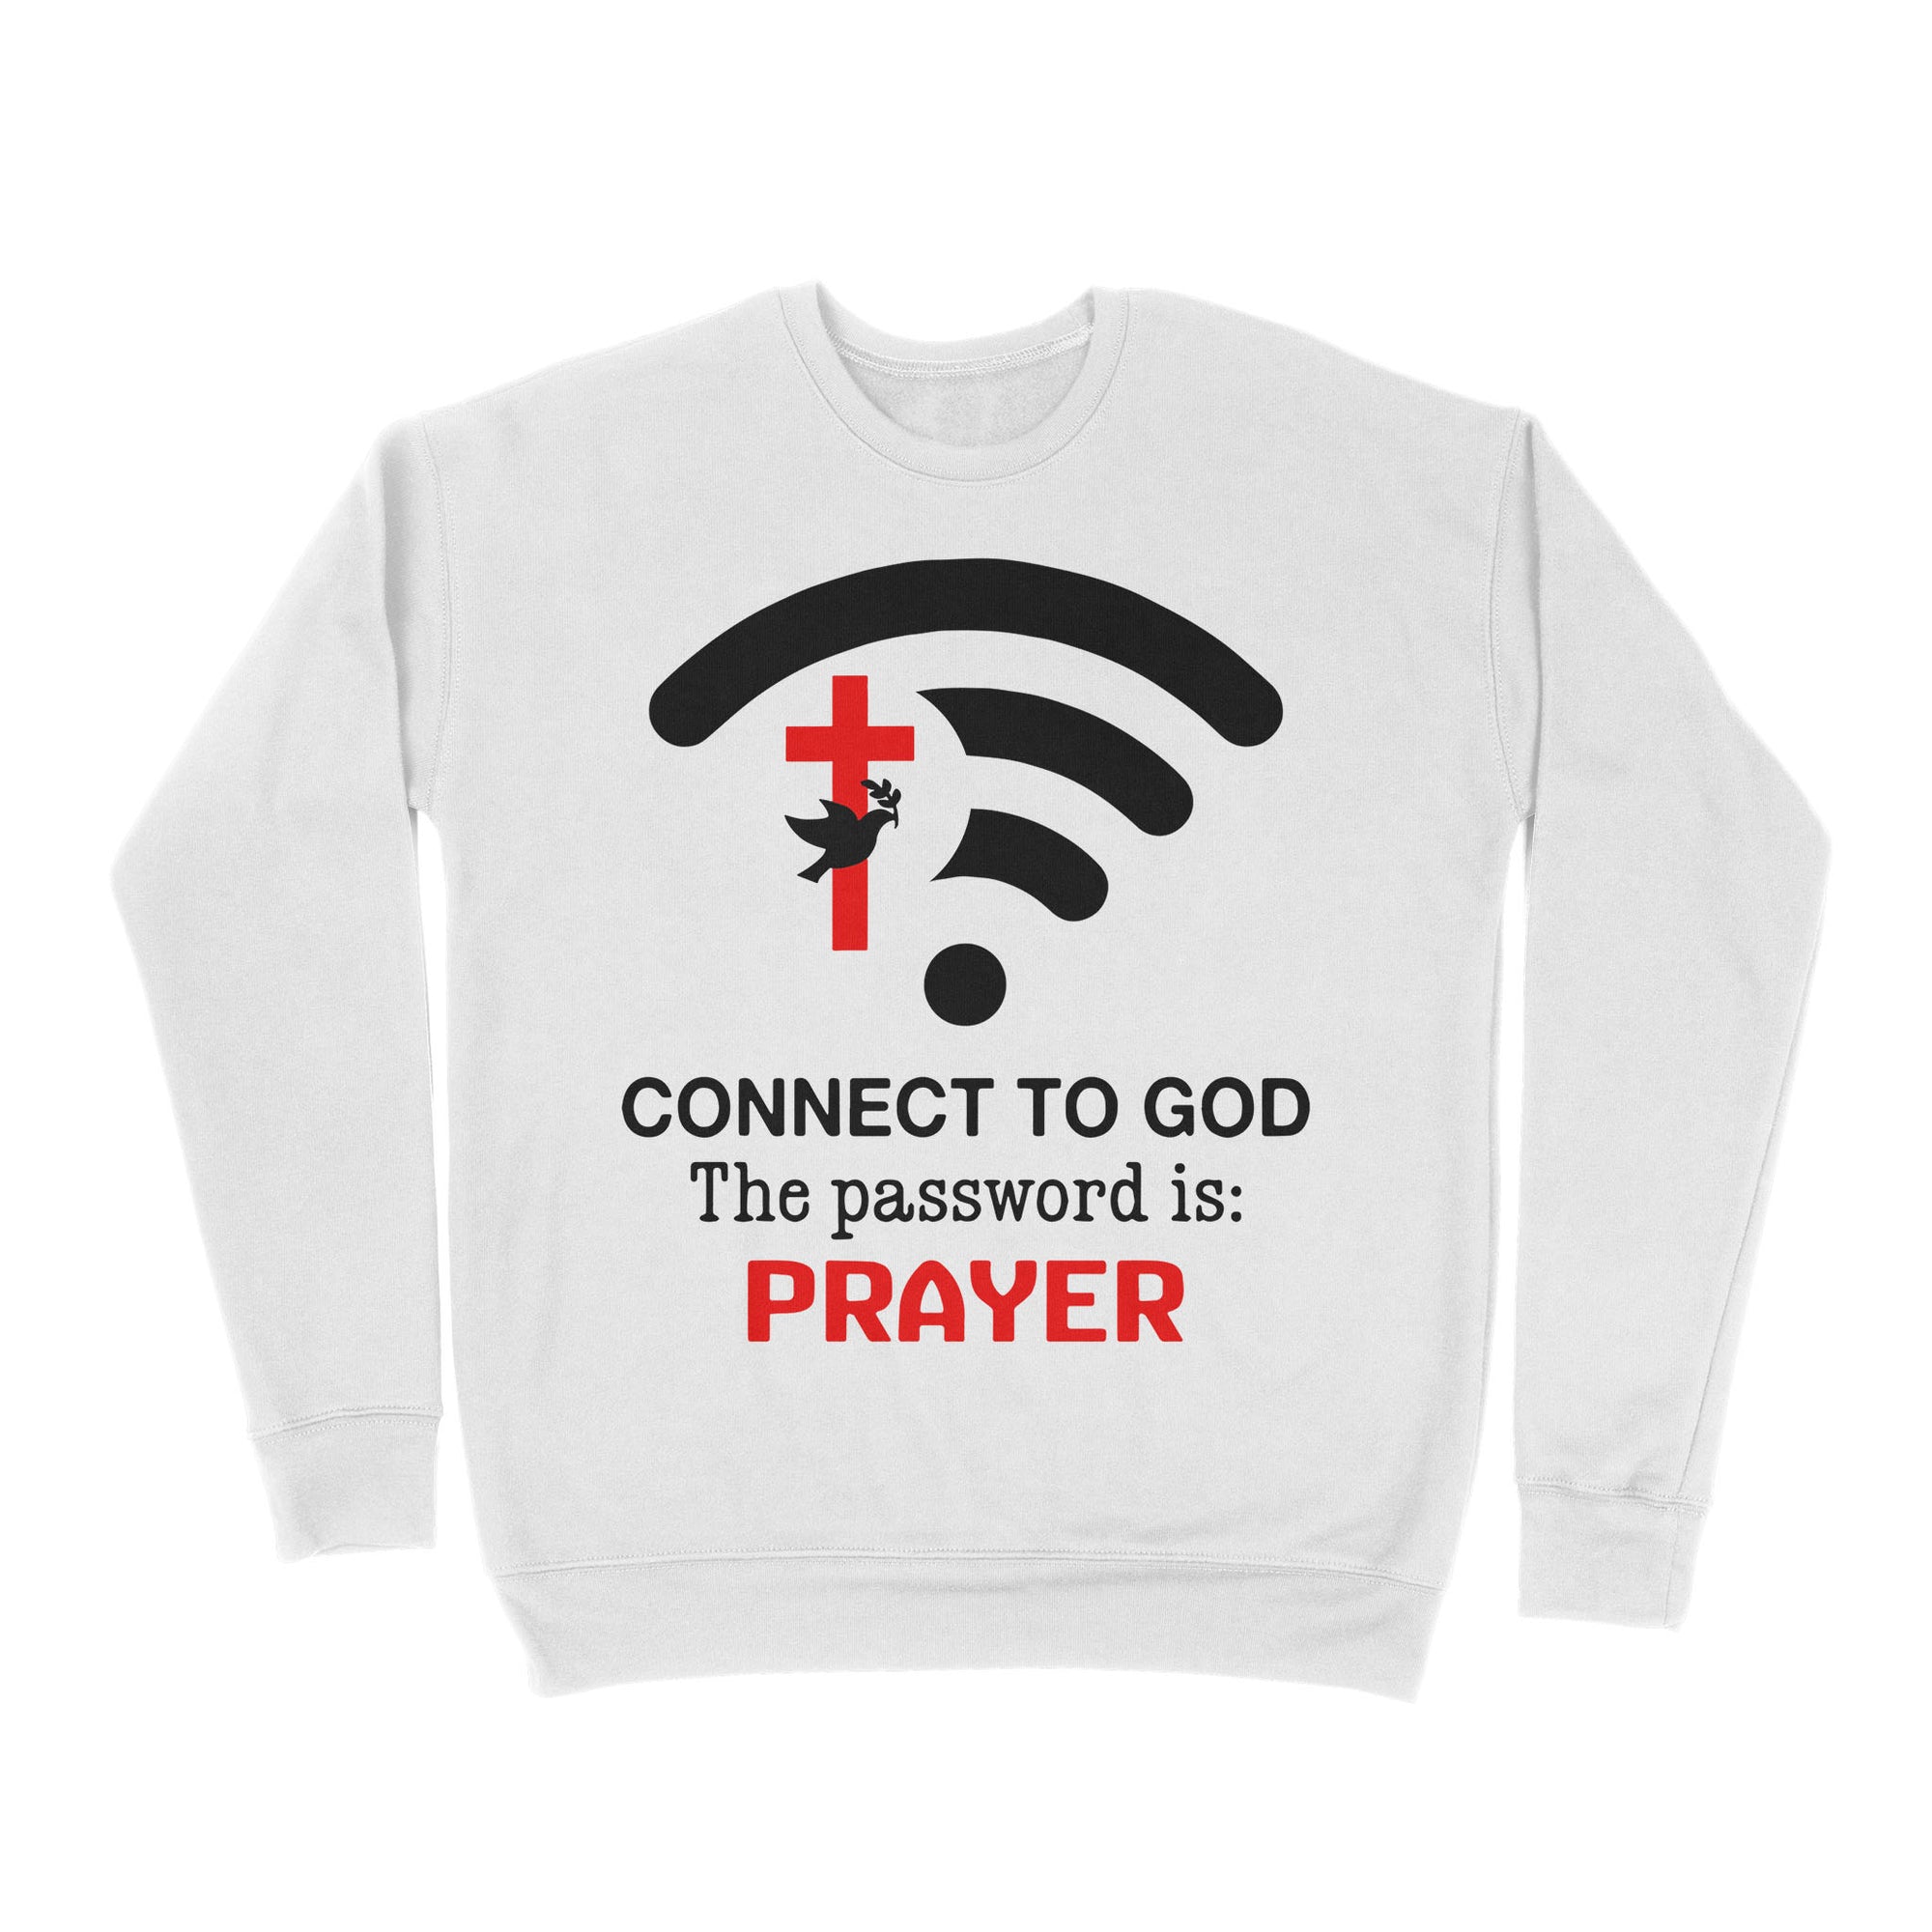 Connect to God the password is Prayer - Premium Crew Neck Sweatshirt